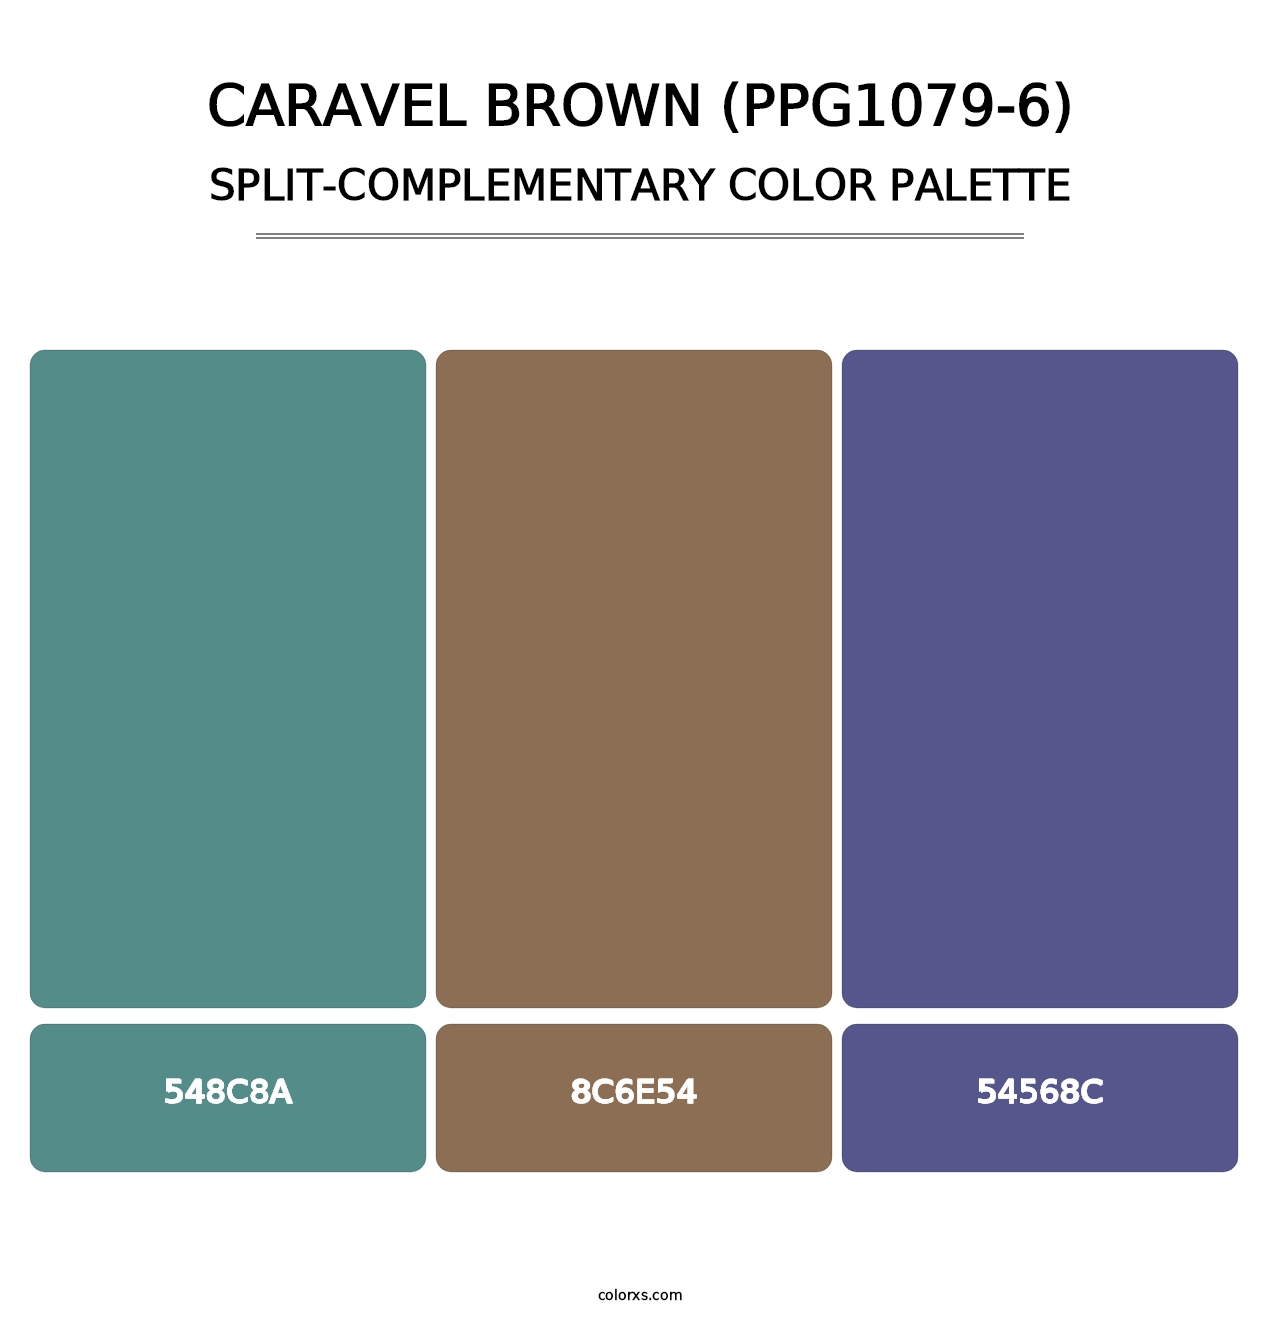 Caravel Brown (PPG1079-6) - Split-Complementary Color Palette